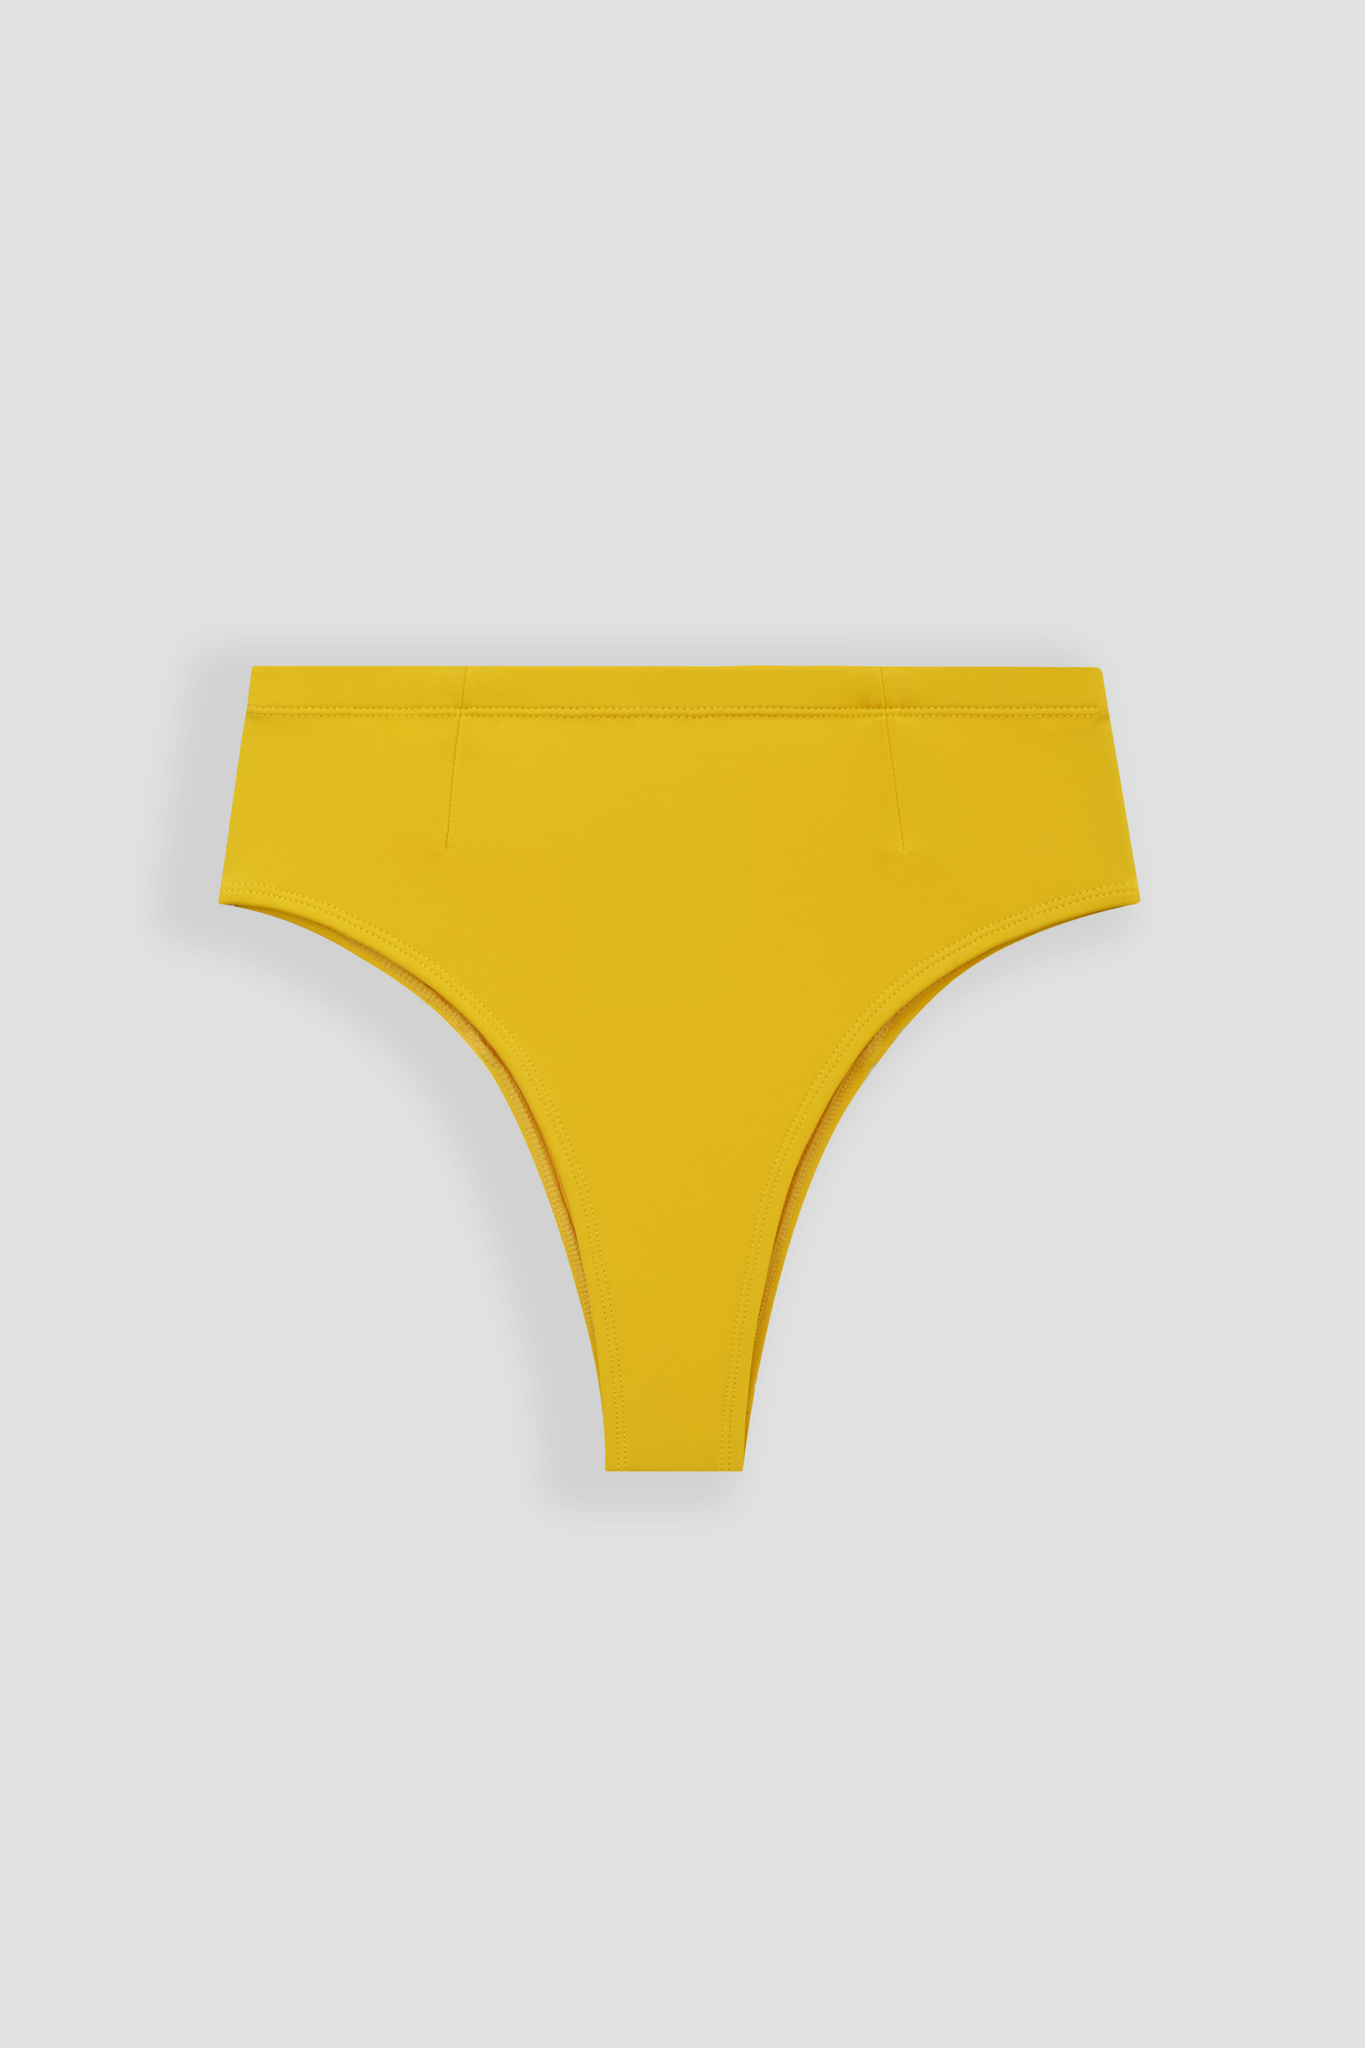 Ninefoot Studio Nyang-Nyang Surf Bikini Bottom in Yellow Illusion | Bottoms